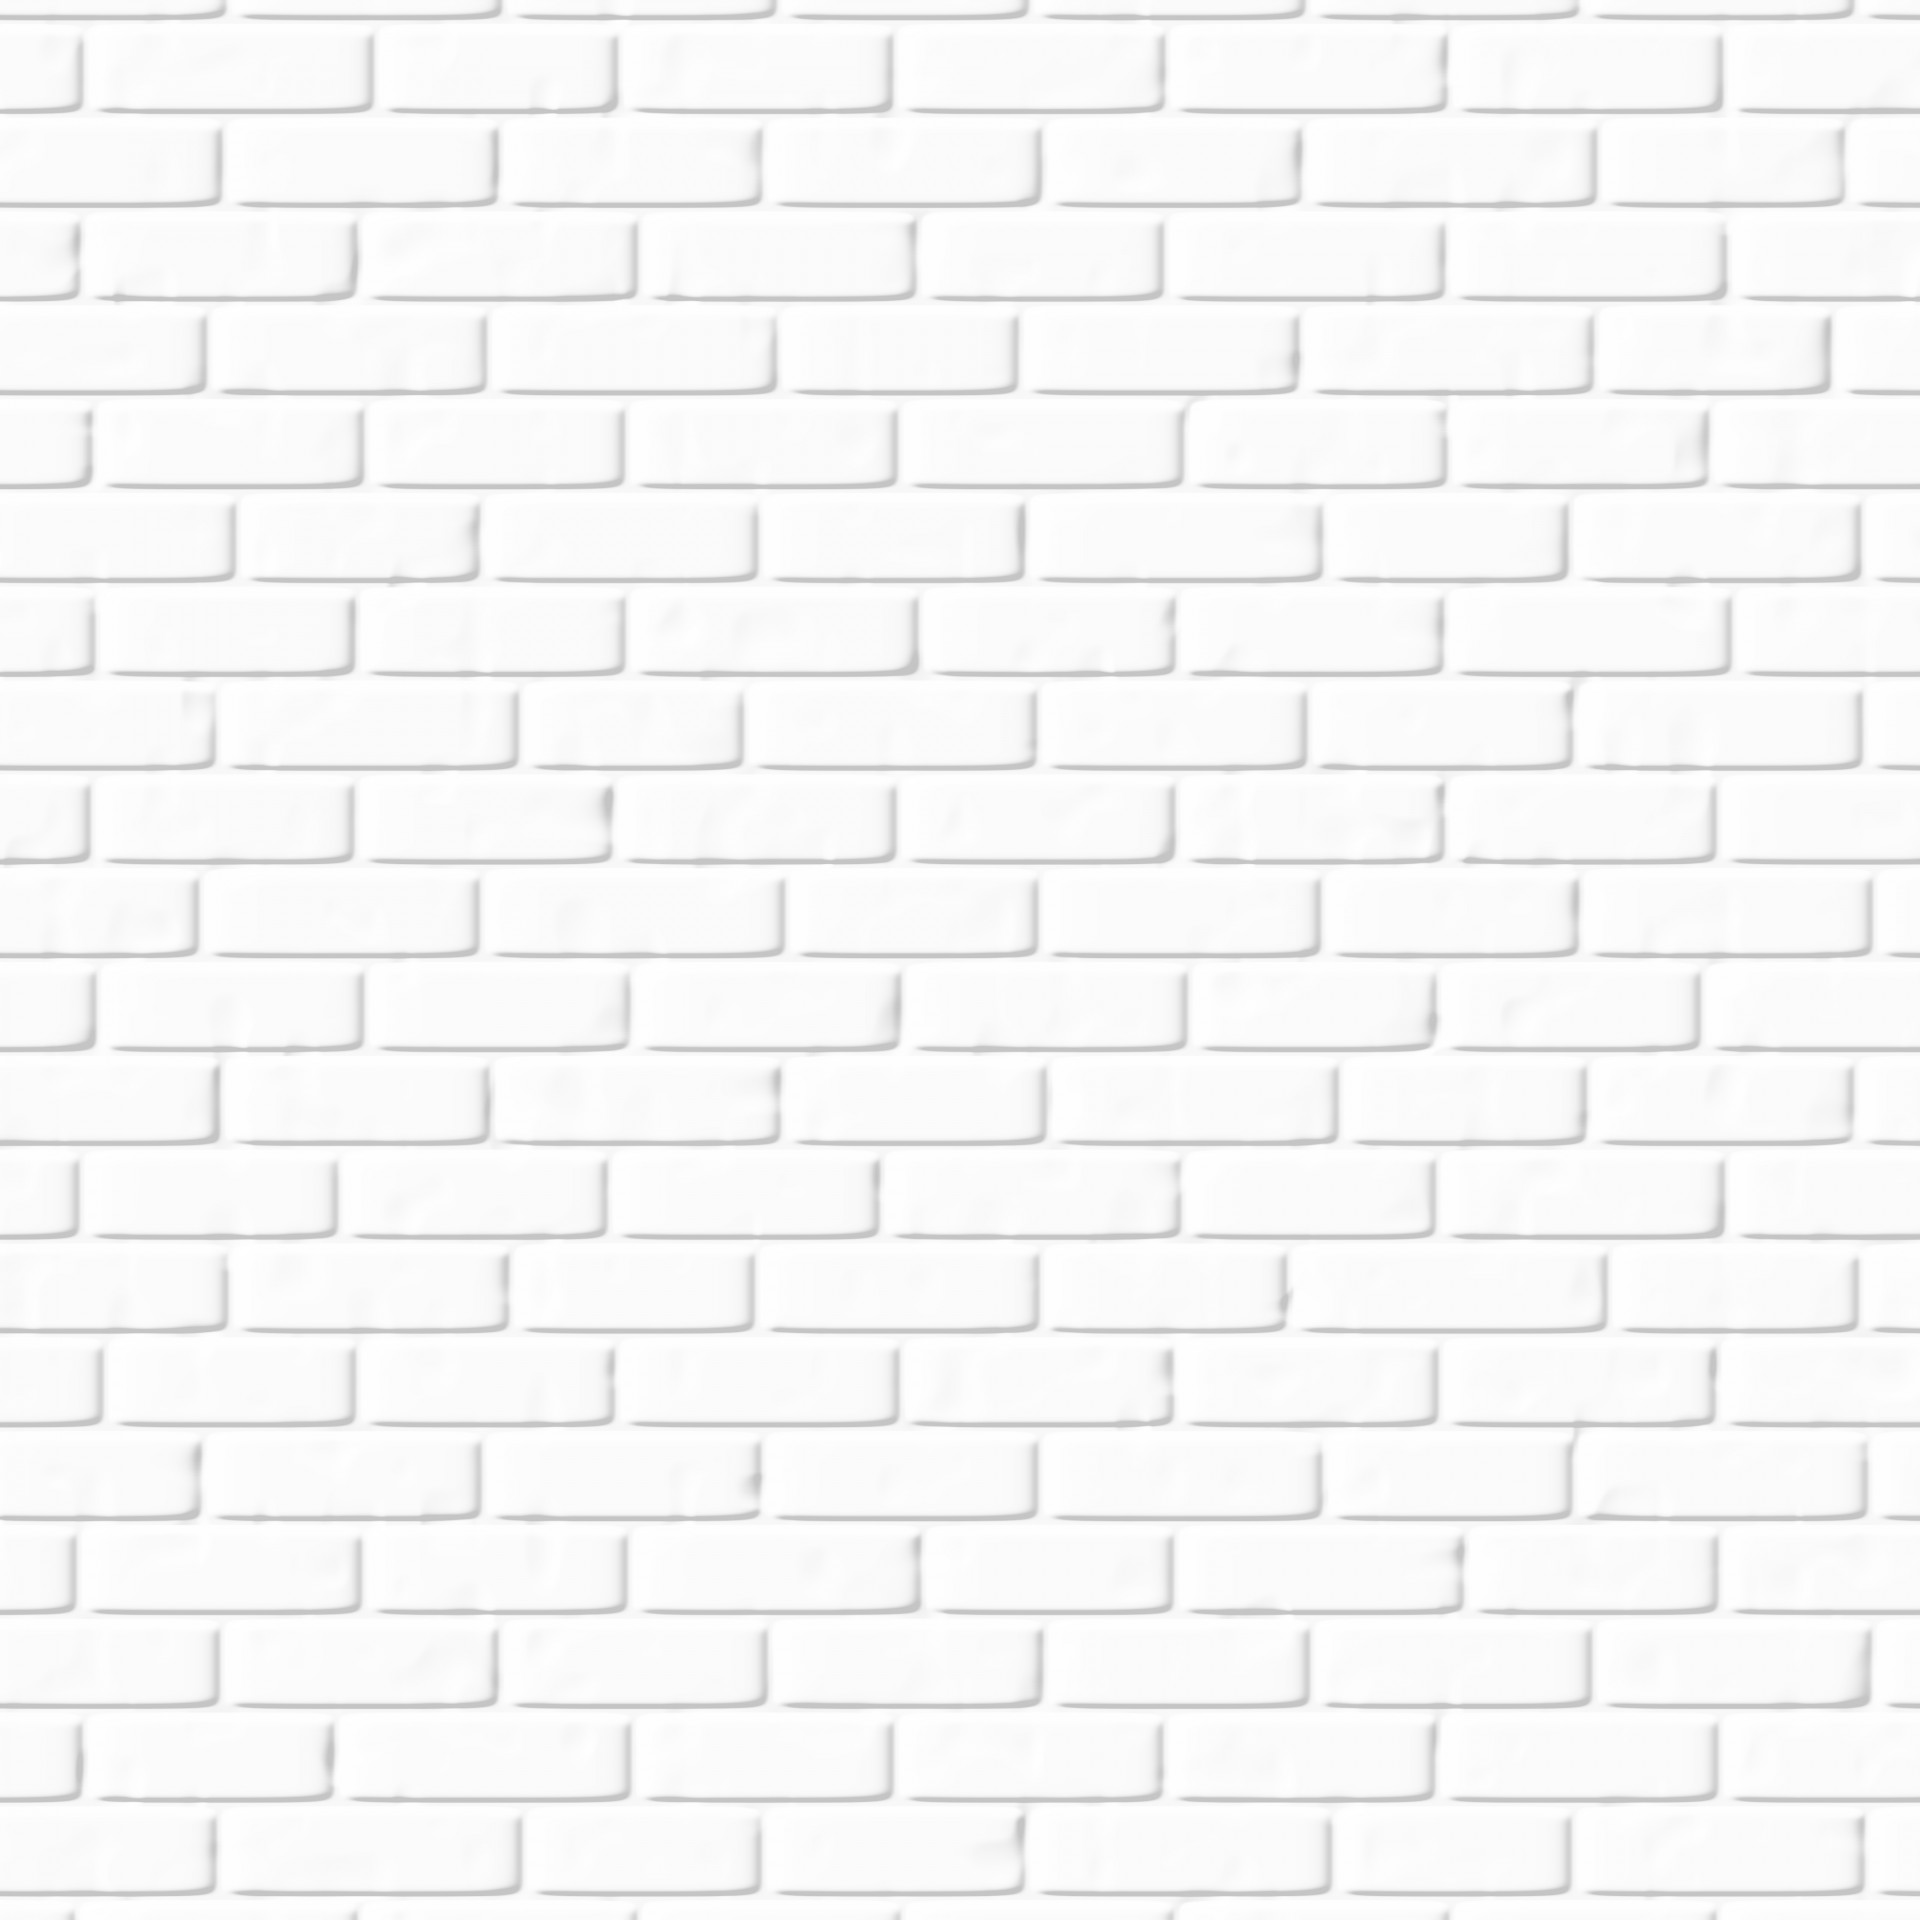 Edit free photo of Wall,bricks,white,pattern,backdrop - needpix.com